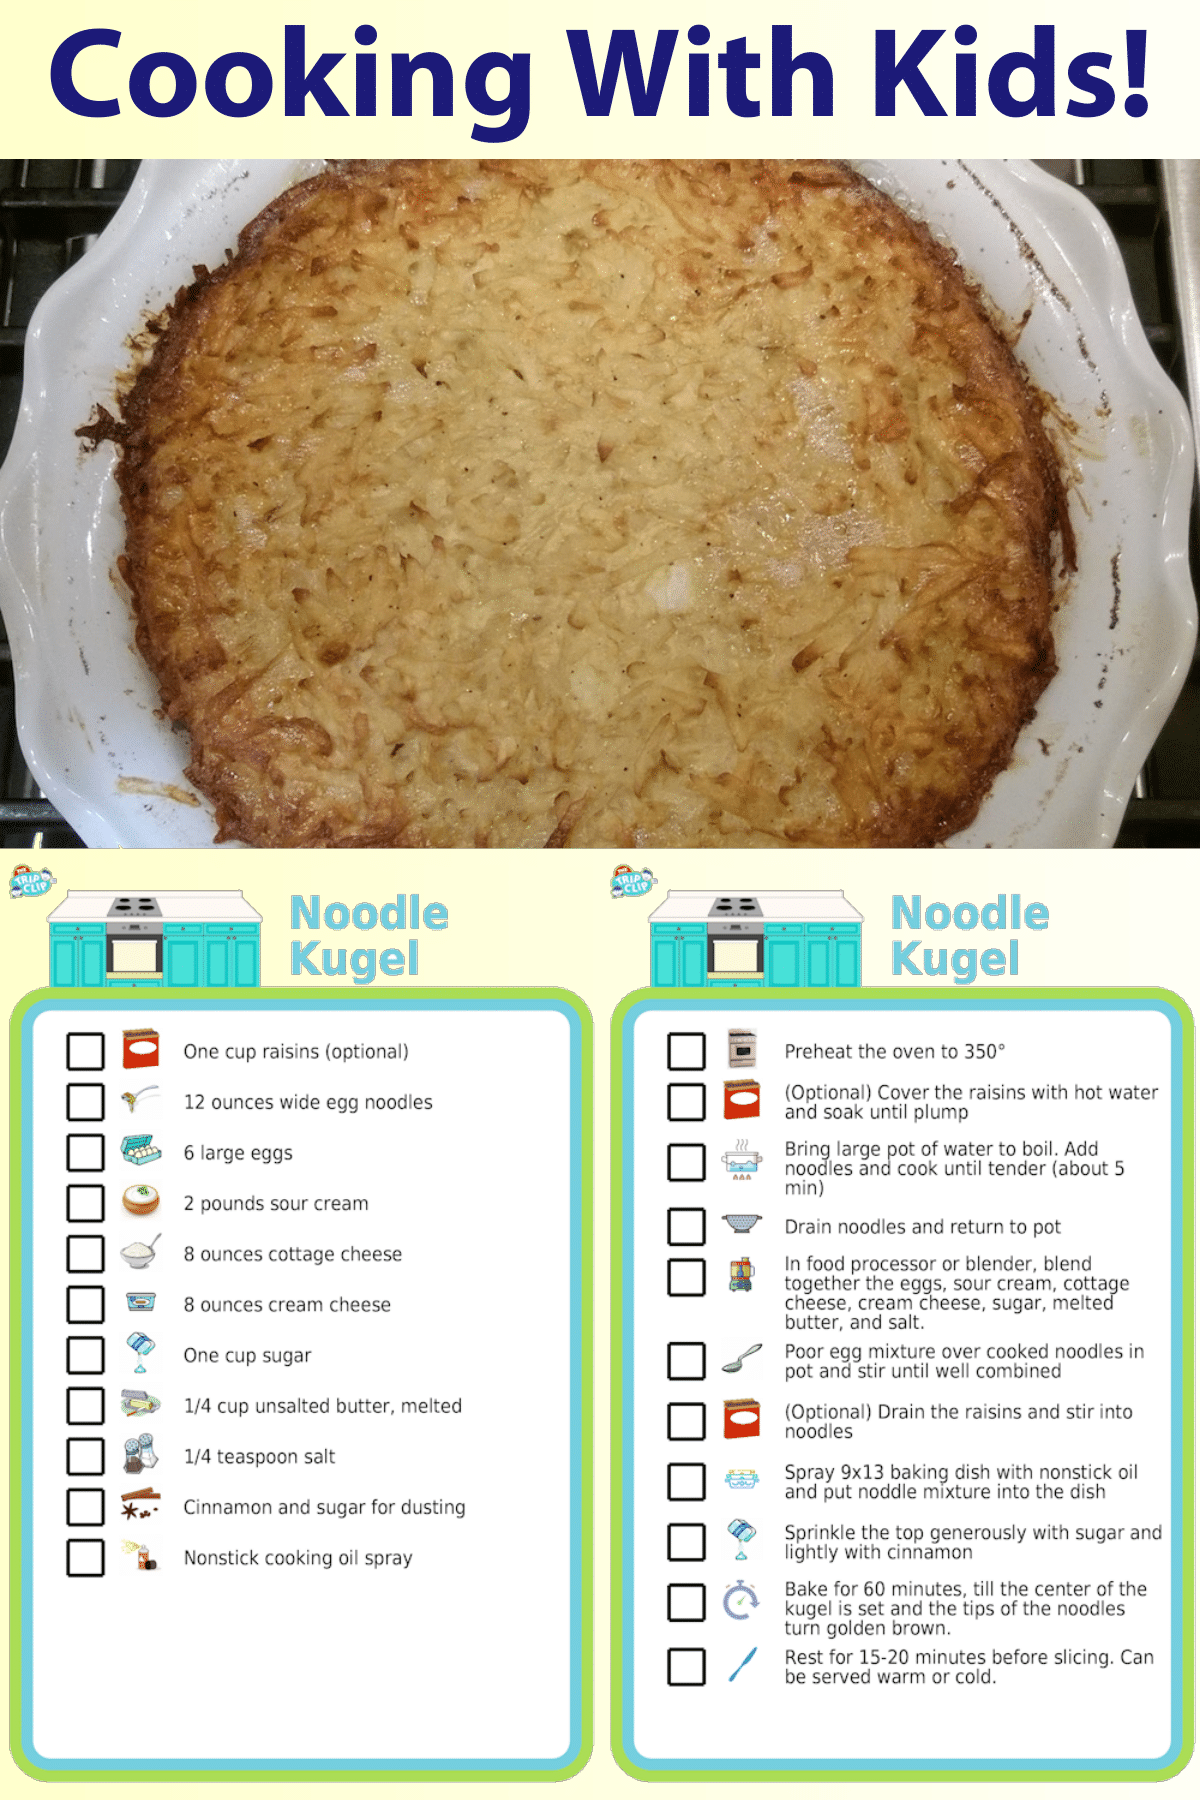 Picture checklist showing recipe for making noodle kugel